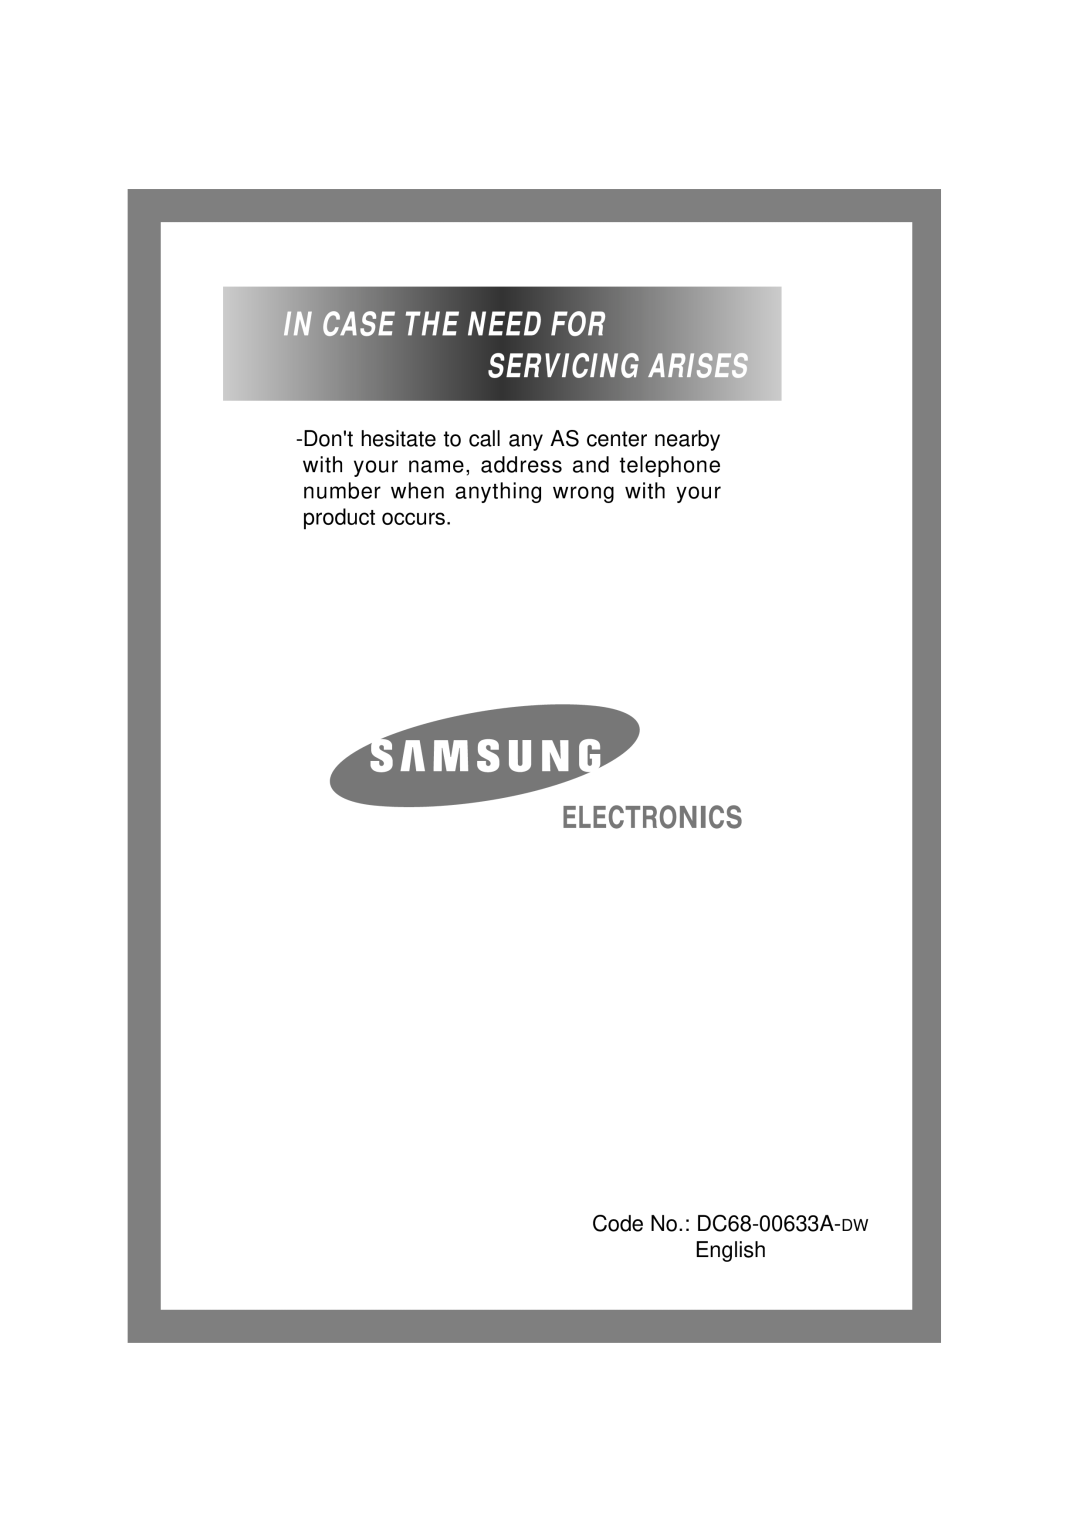 Samsung P1403J, P805J, P1405J, P1005j, P1003J, P1205J In Case The Need For Servicing Arises, Code No. DC68-00633A-DW English 